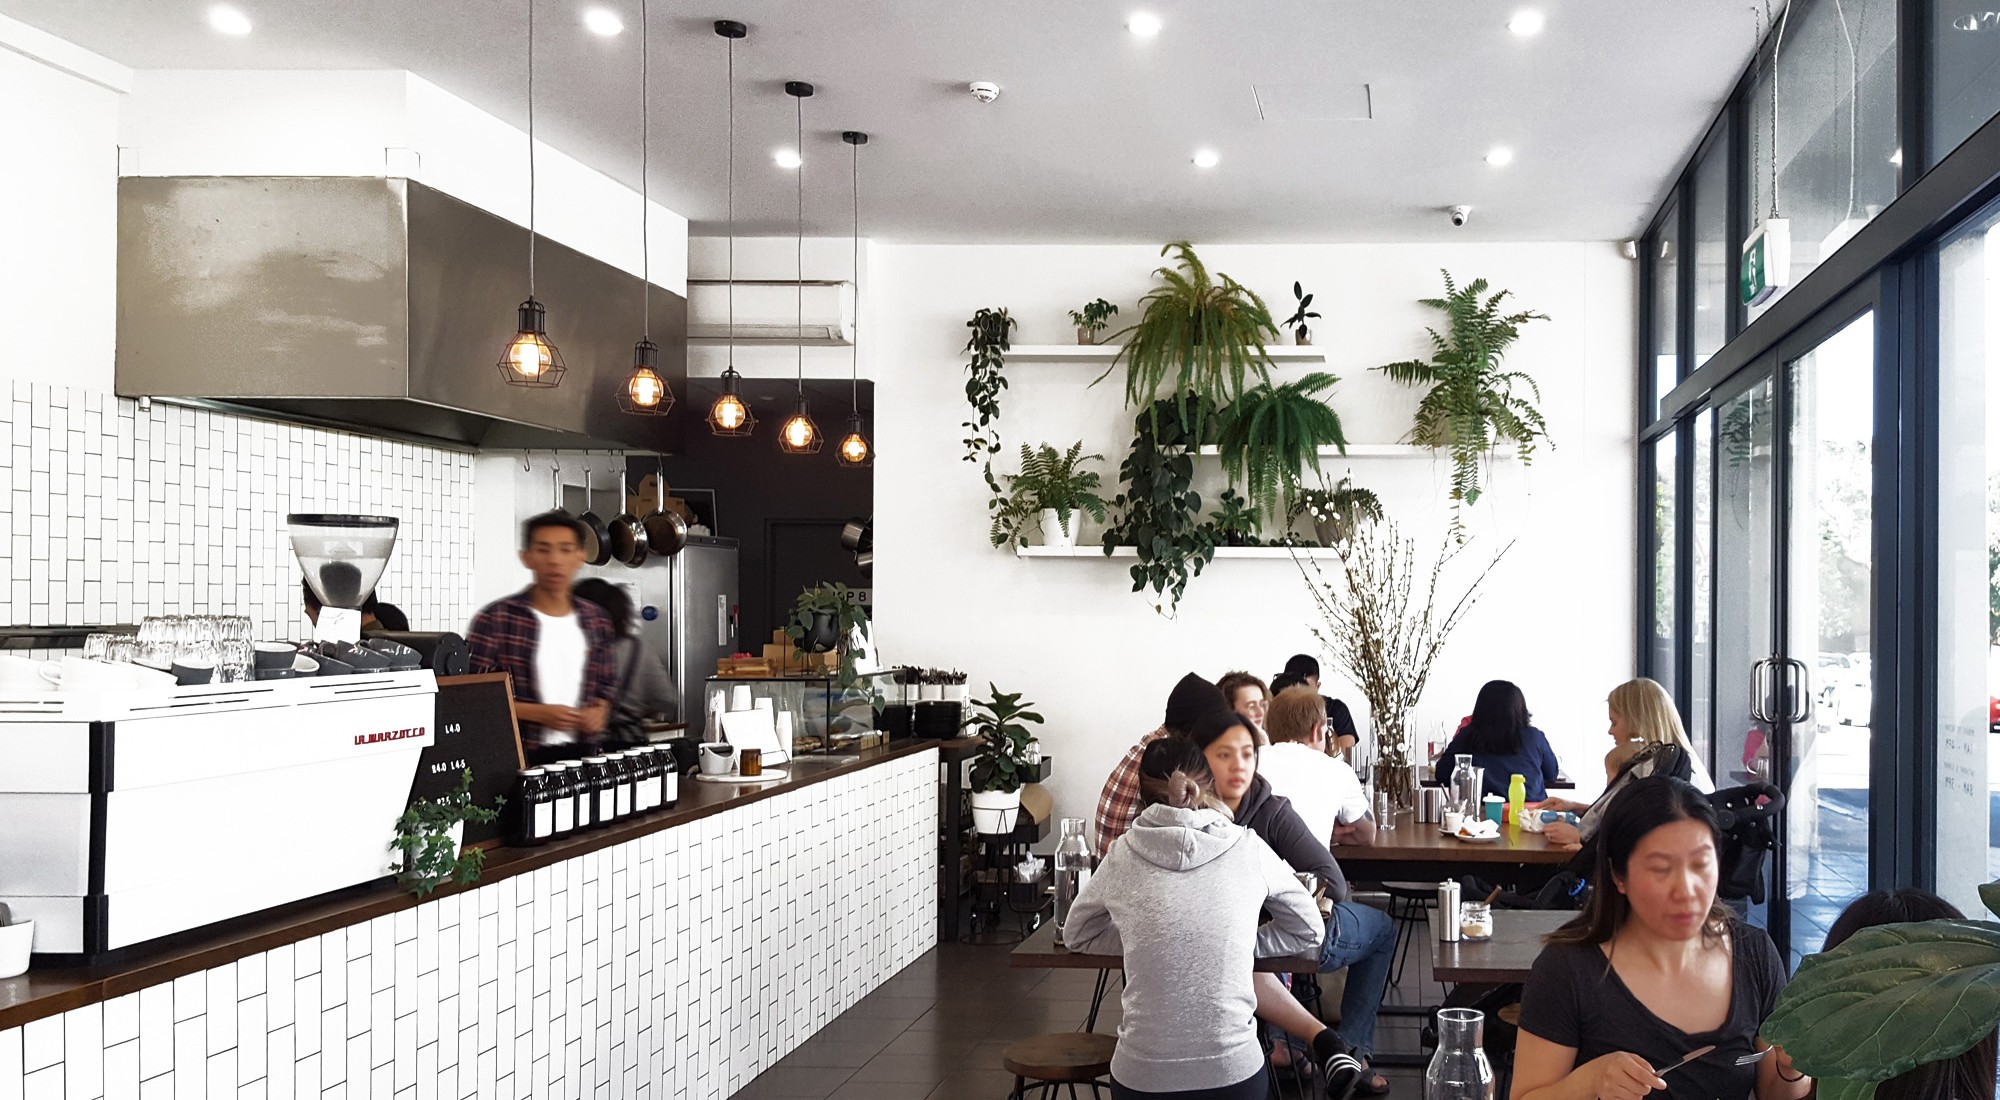 Basalt_Studio_Interior_Design_Designer_Architecture_Sydney_Restaurant_Cafe_Retail_Food_Green_Wall_Plants_Tiles_Minimal_Modern_Counter_Coffee_Timber1